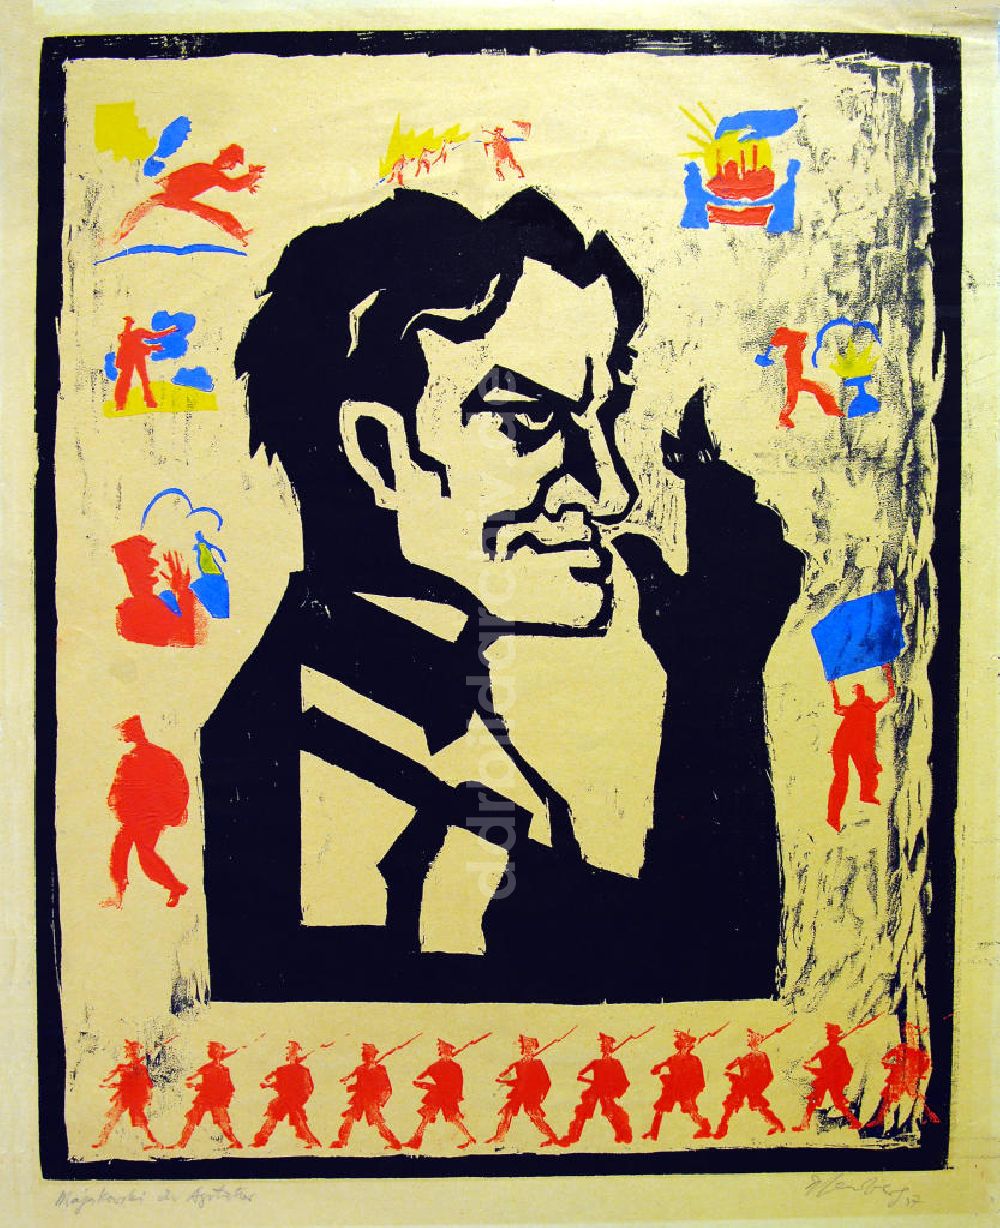 Berlin: Grafik von Herbert Sandberg Majakowski, der Agitator aus dem Jahr 1957